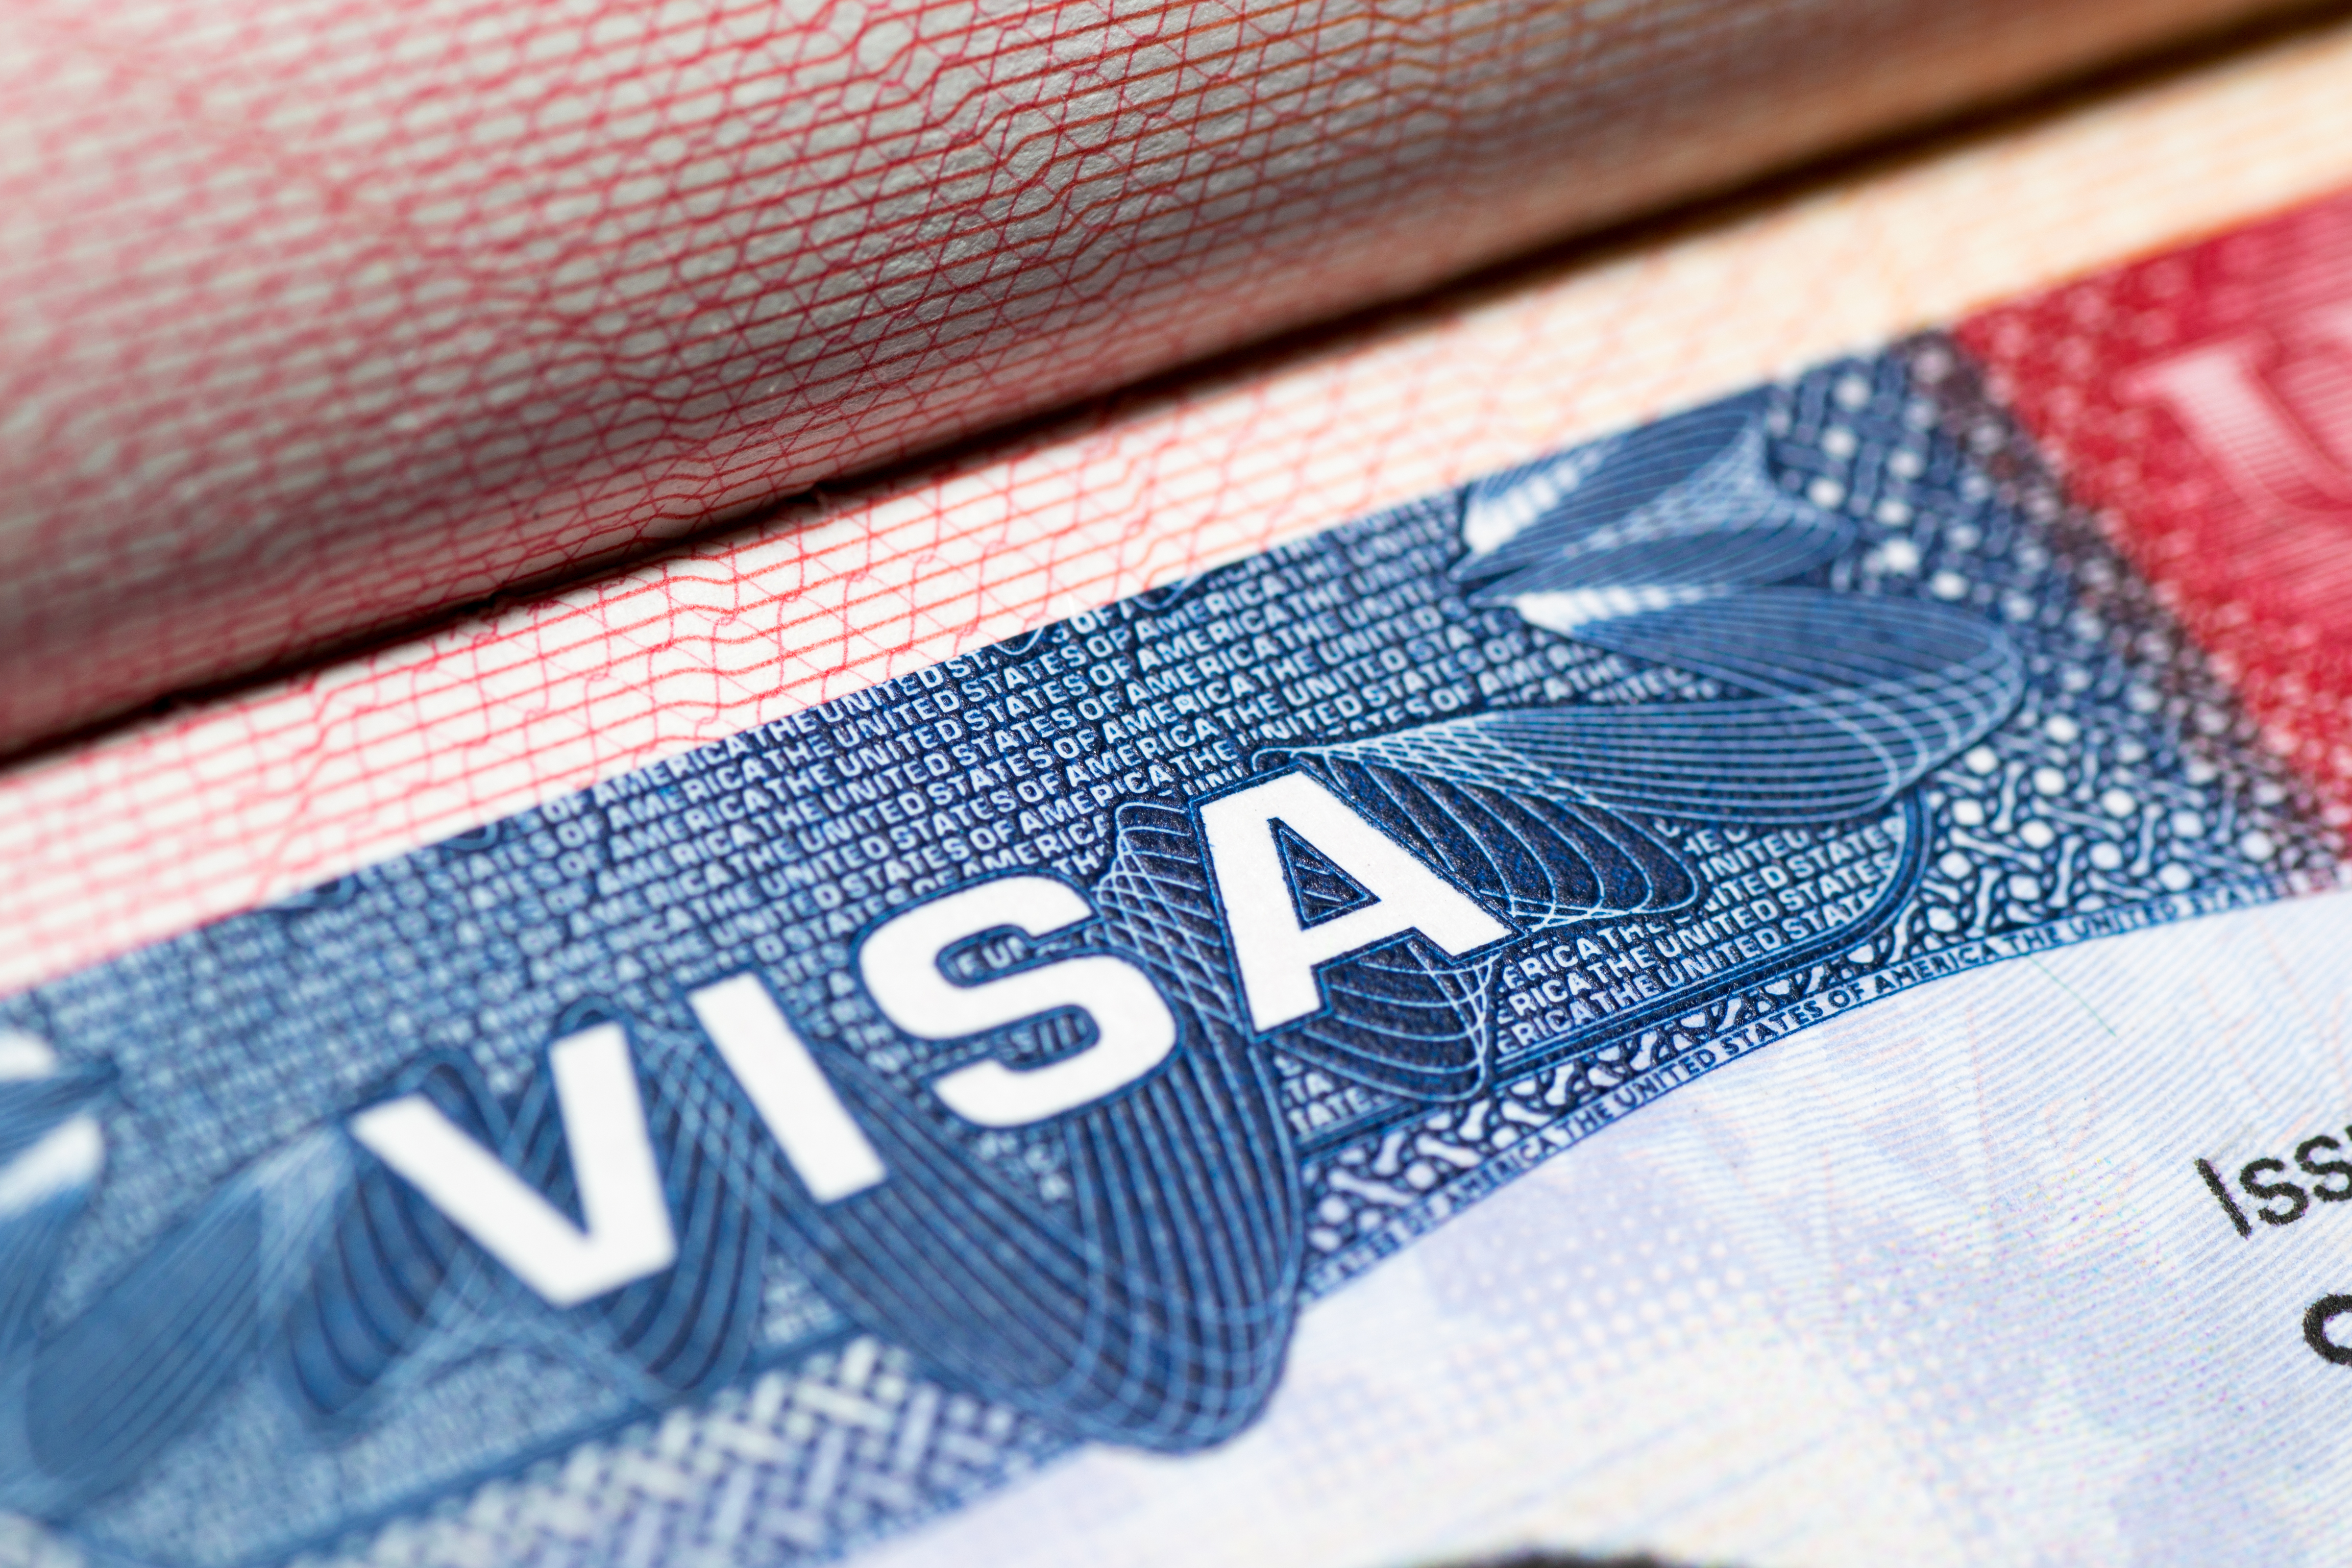 Image of a U.S. visa.